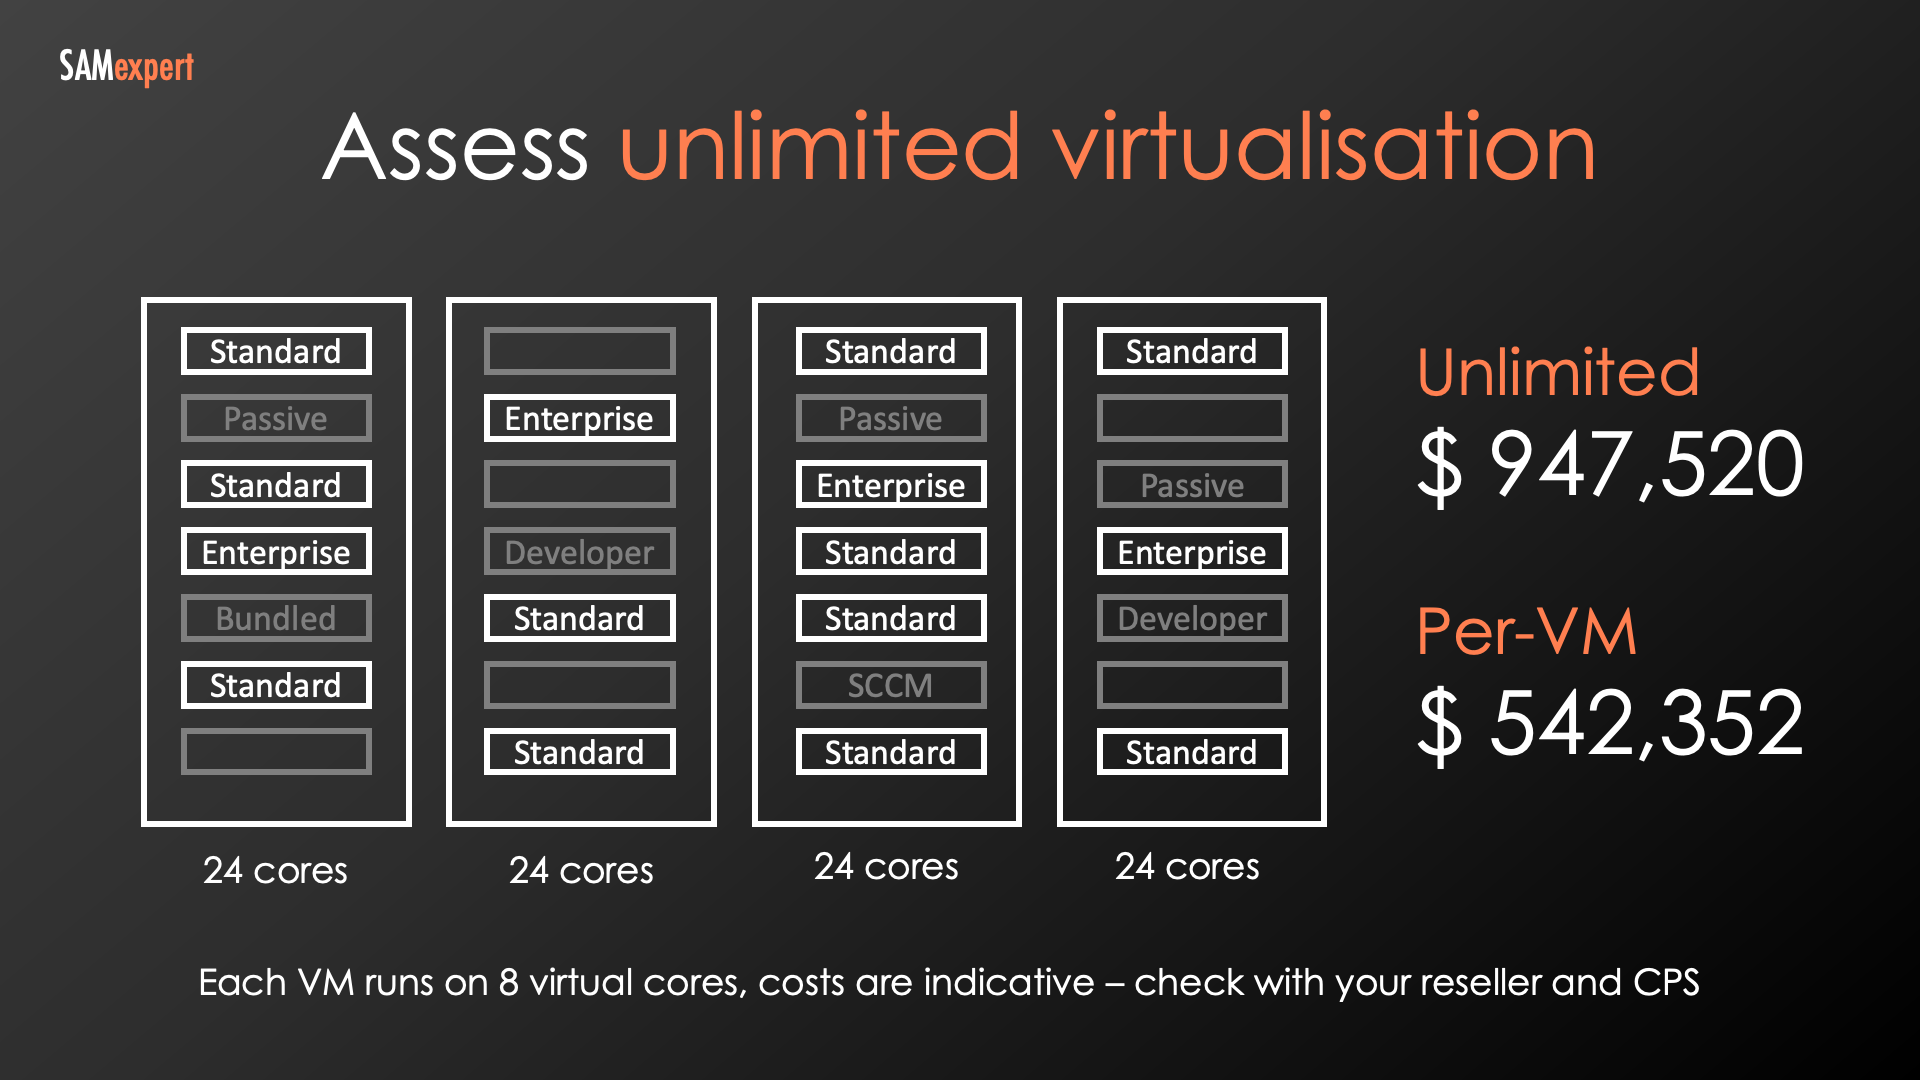 A Case Against Unlimited Virtualisation